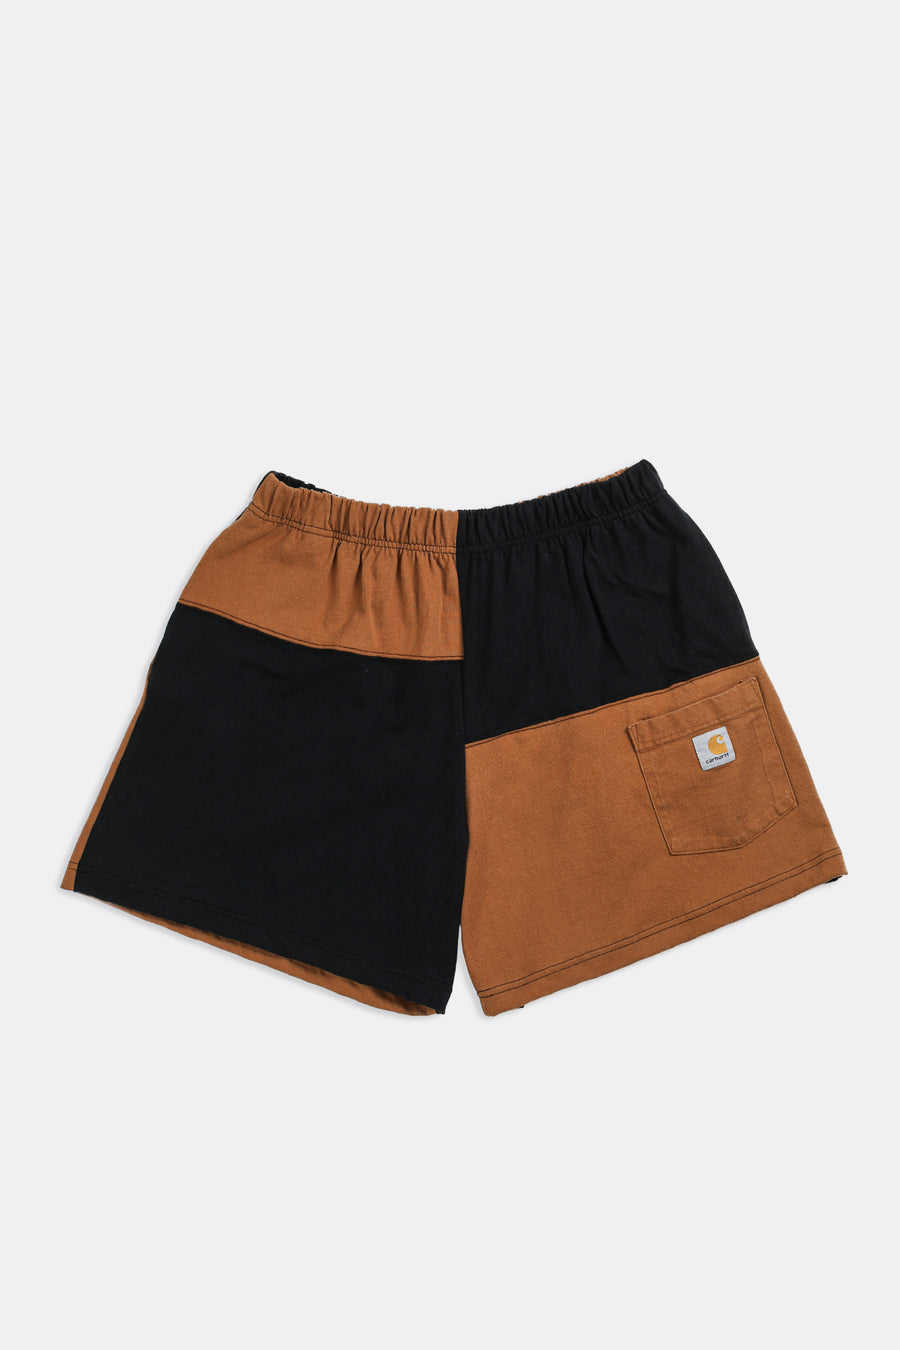 Unisex Rework Carhartt Patchwork Tee Shorts - XS, M, L